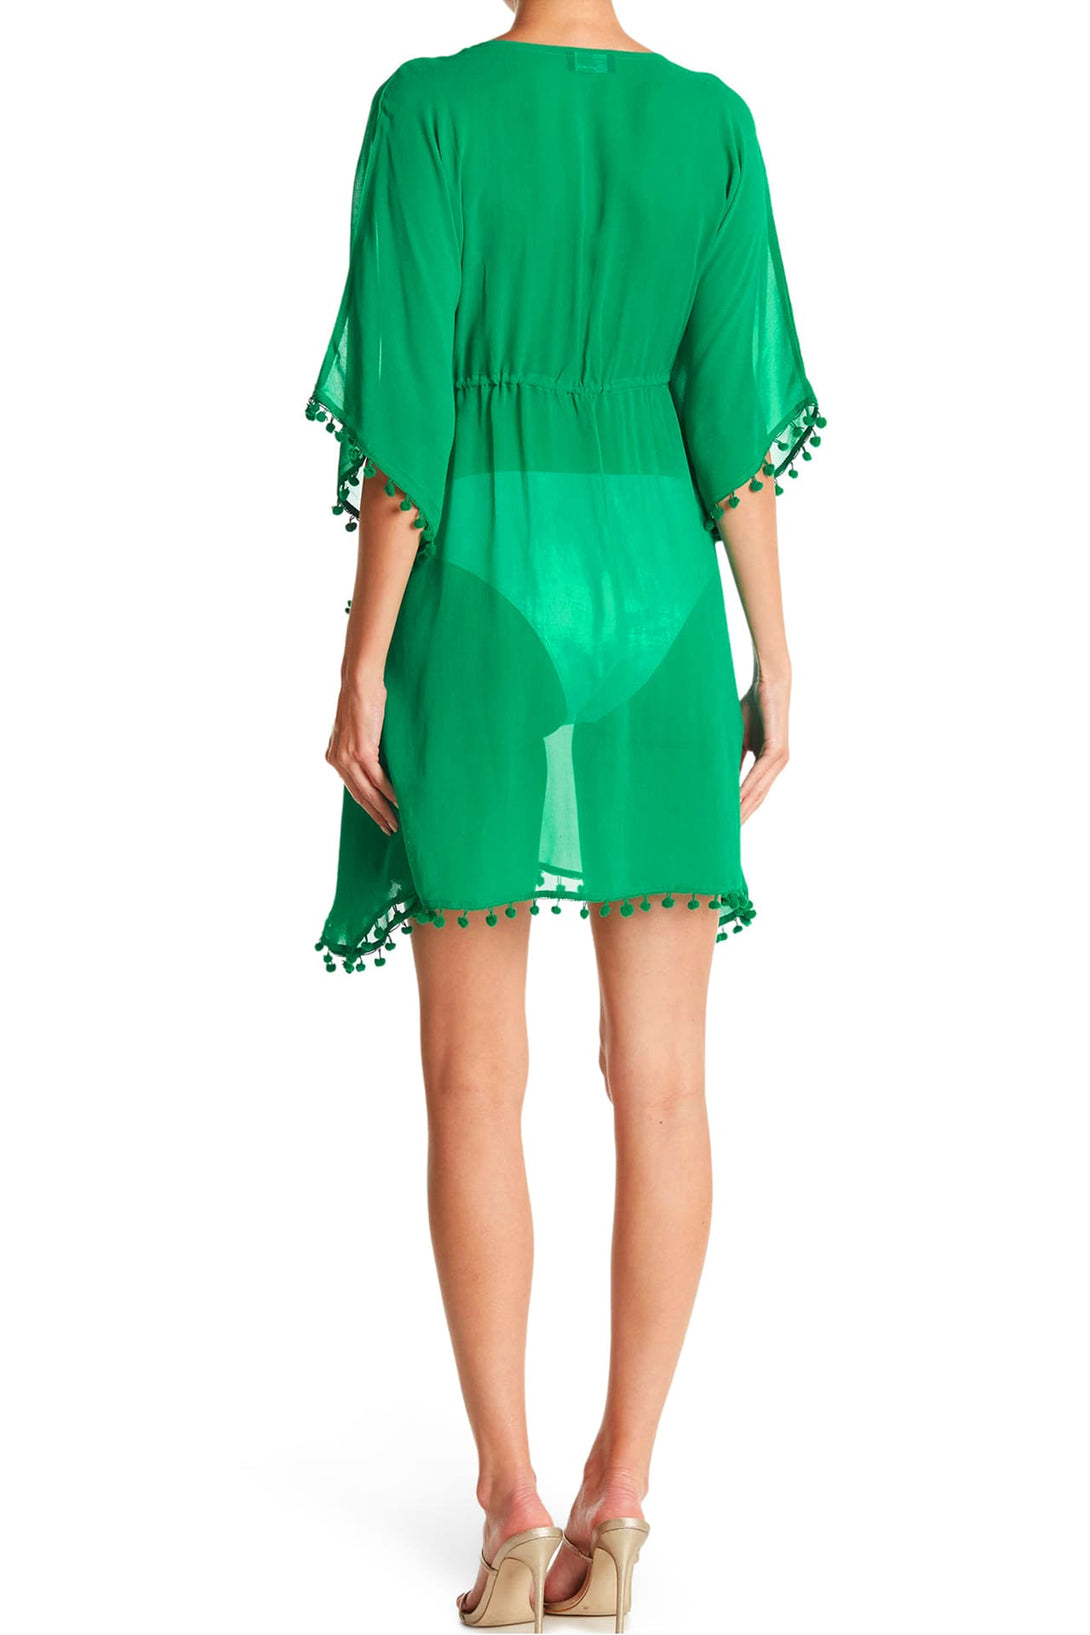 "green swimsuit cover up" "Shahida Parides" "sheer bikini cover up" "caftan swim cover up"